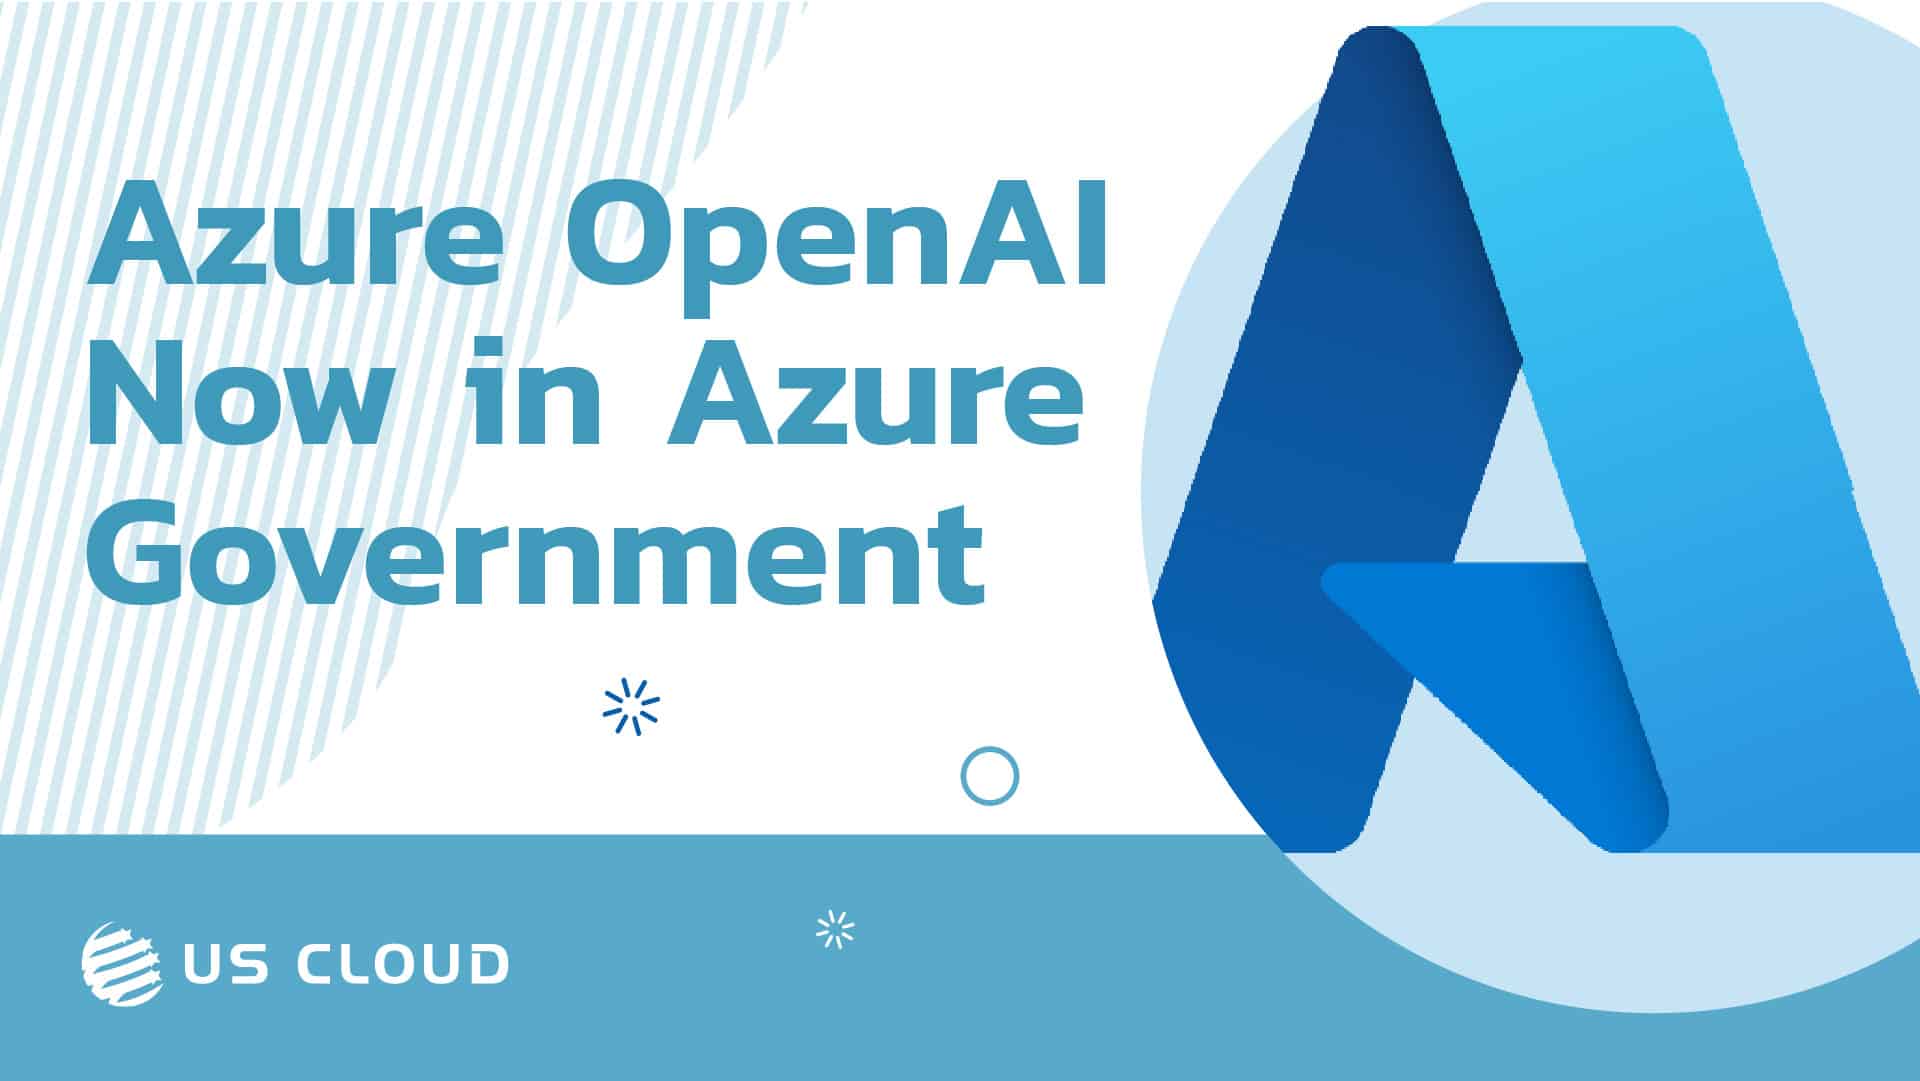 Azure OpenAI Service Comes to Azure Government